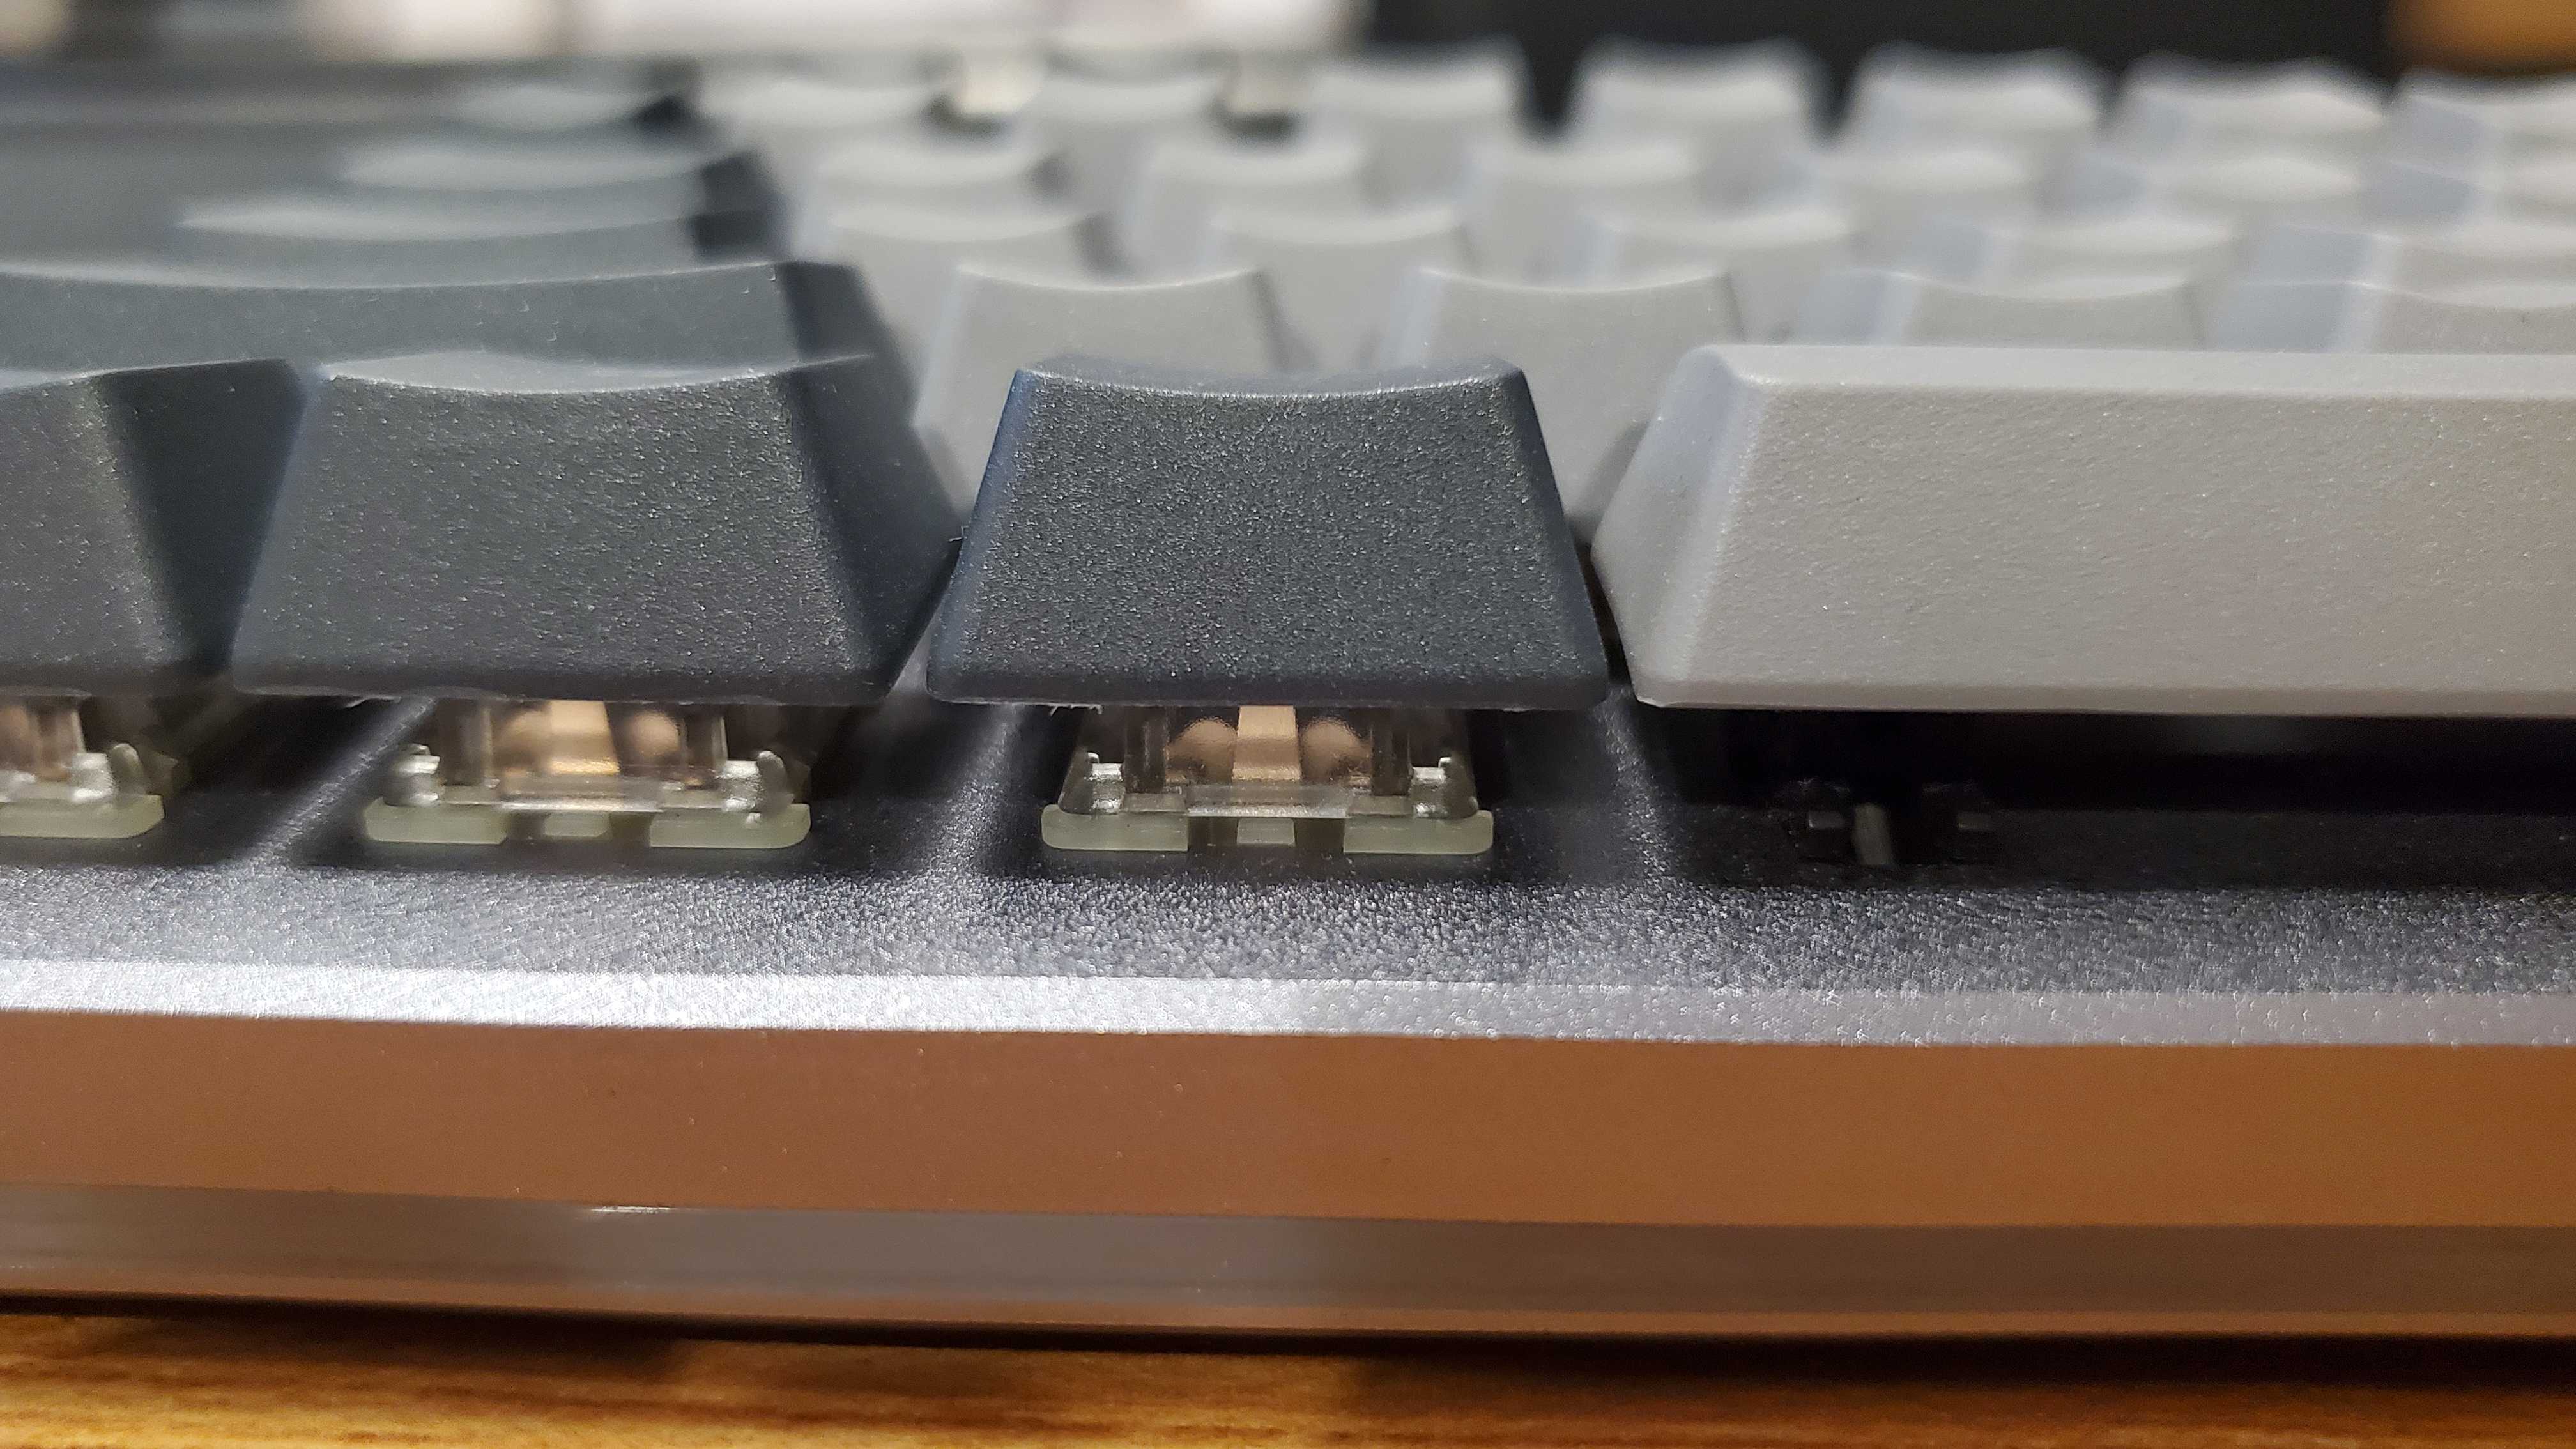 closeup of grey Drop ALT mechanical keyboard